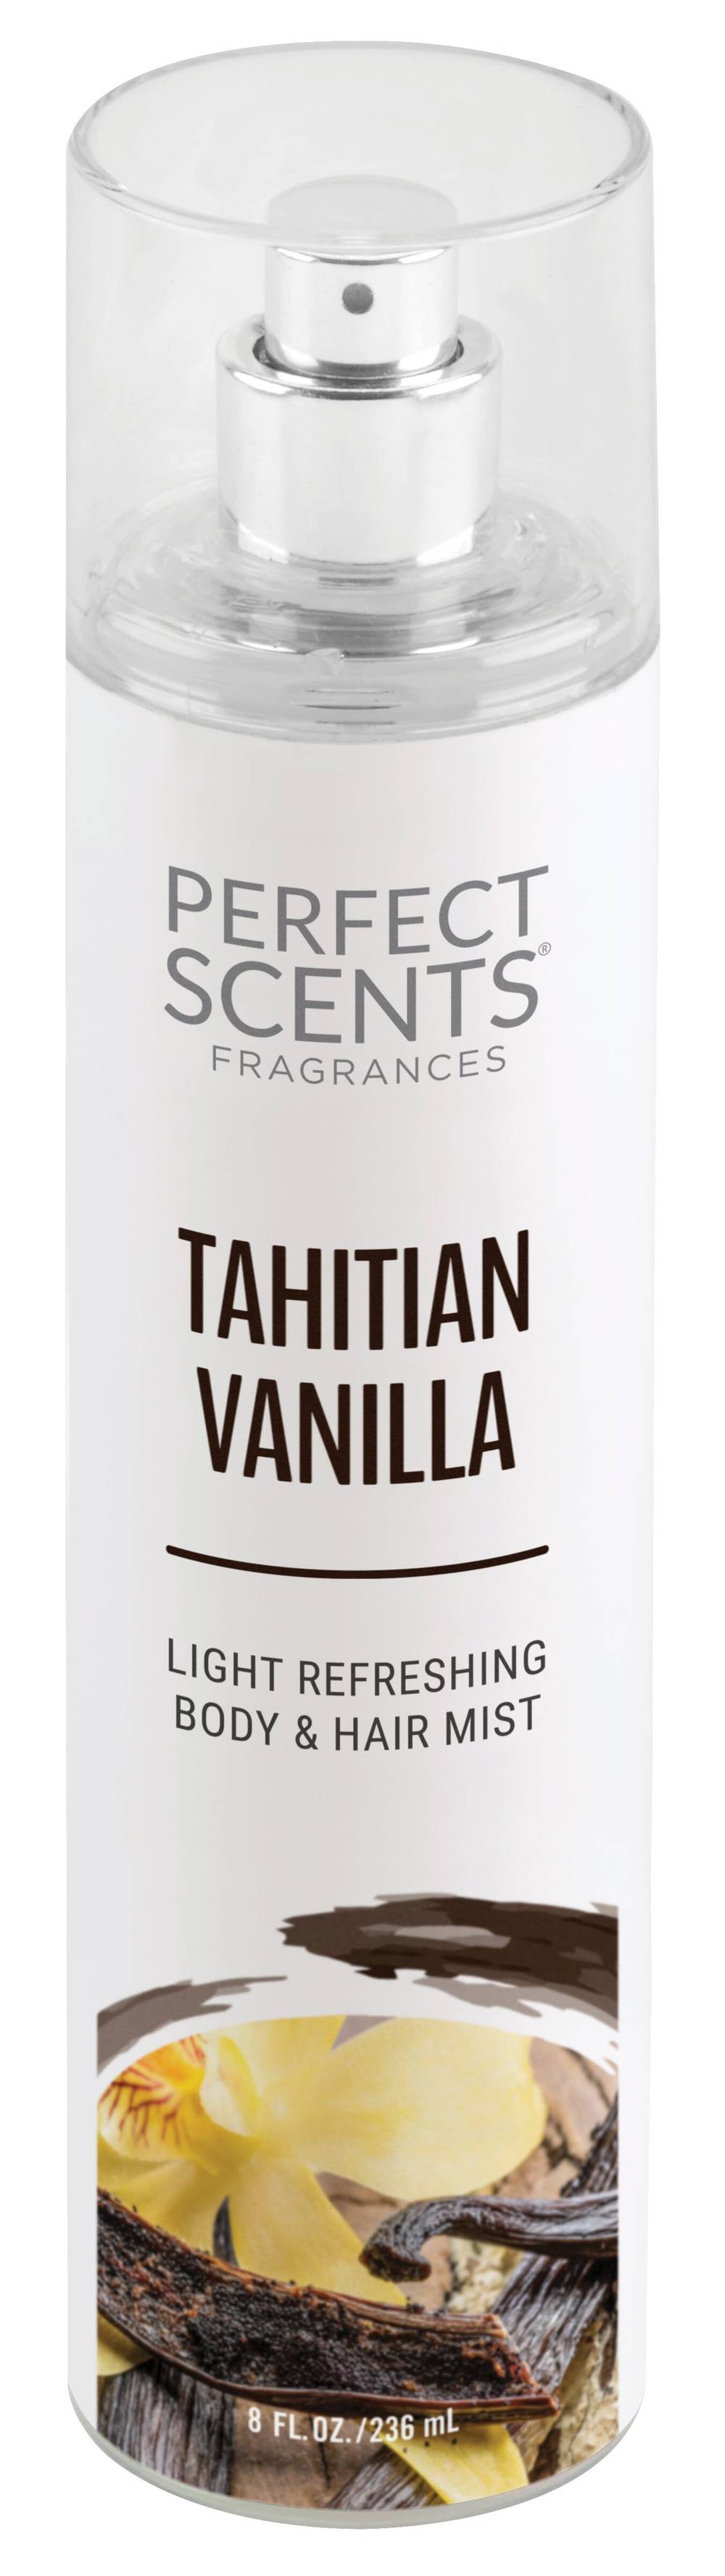 Perfect Scents Tahitian Vanilla Body & Hair Mist, 8 OZ